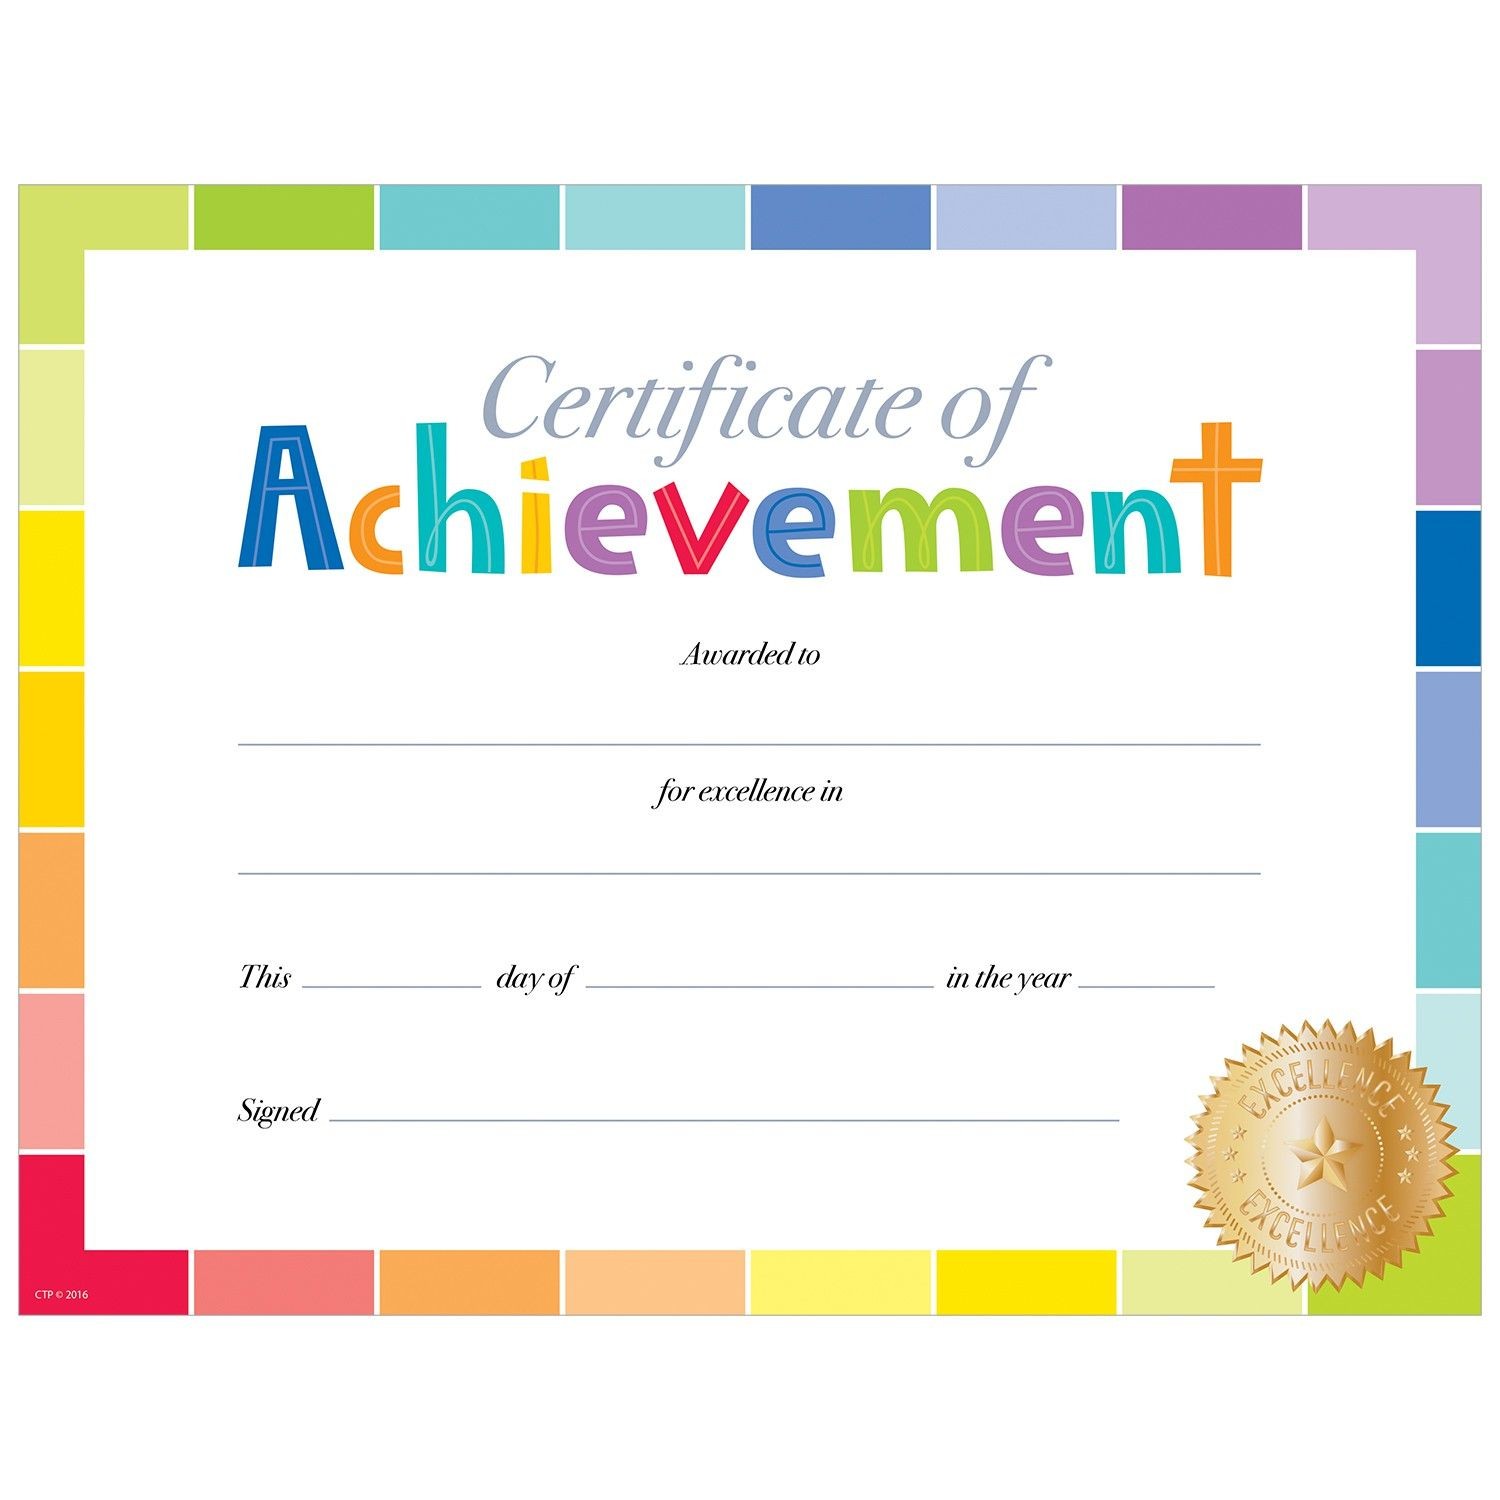 Award Certificates Kids Art Google Search SCMAC Certificate Of Achievement For